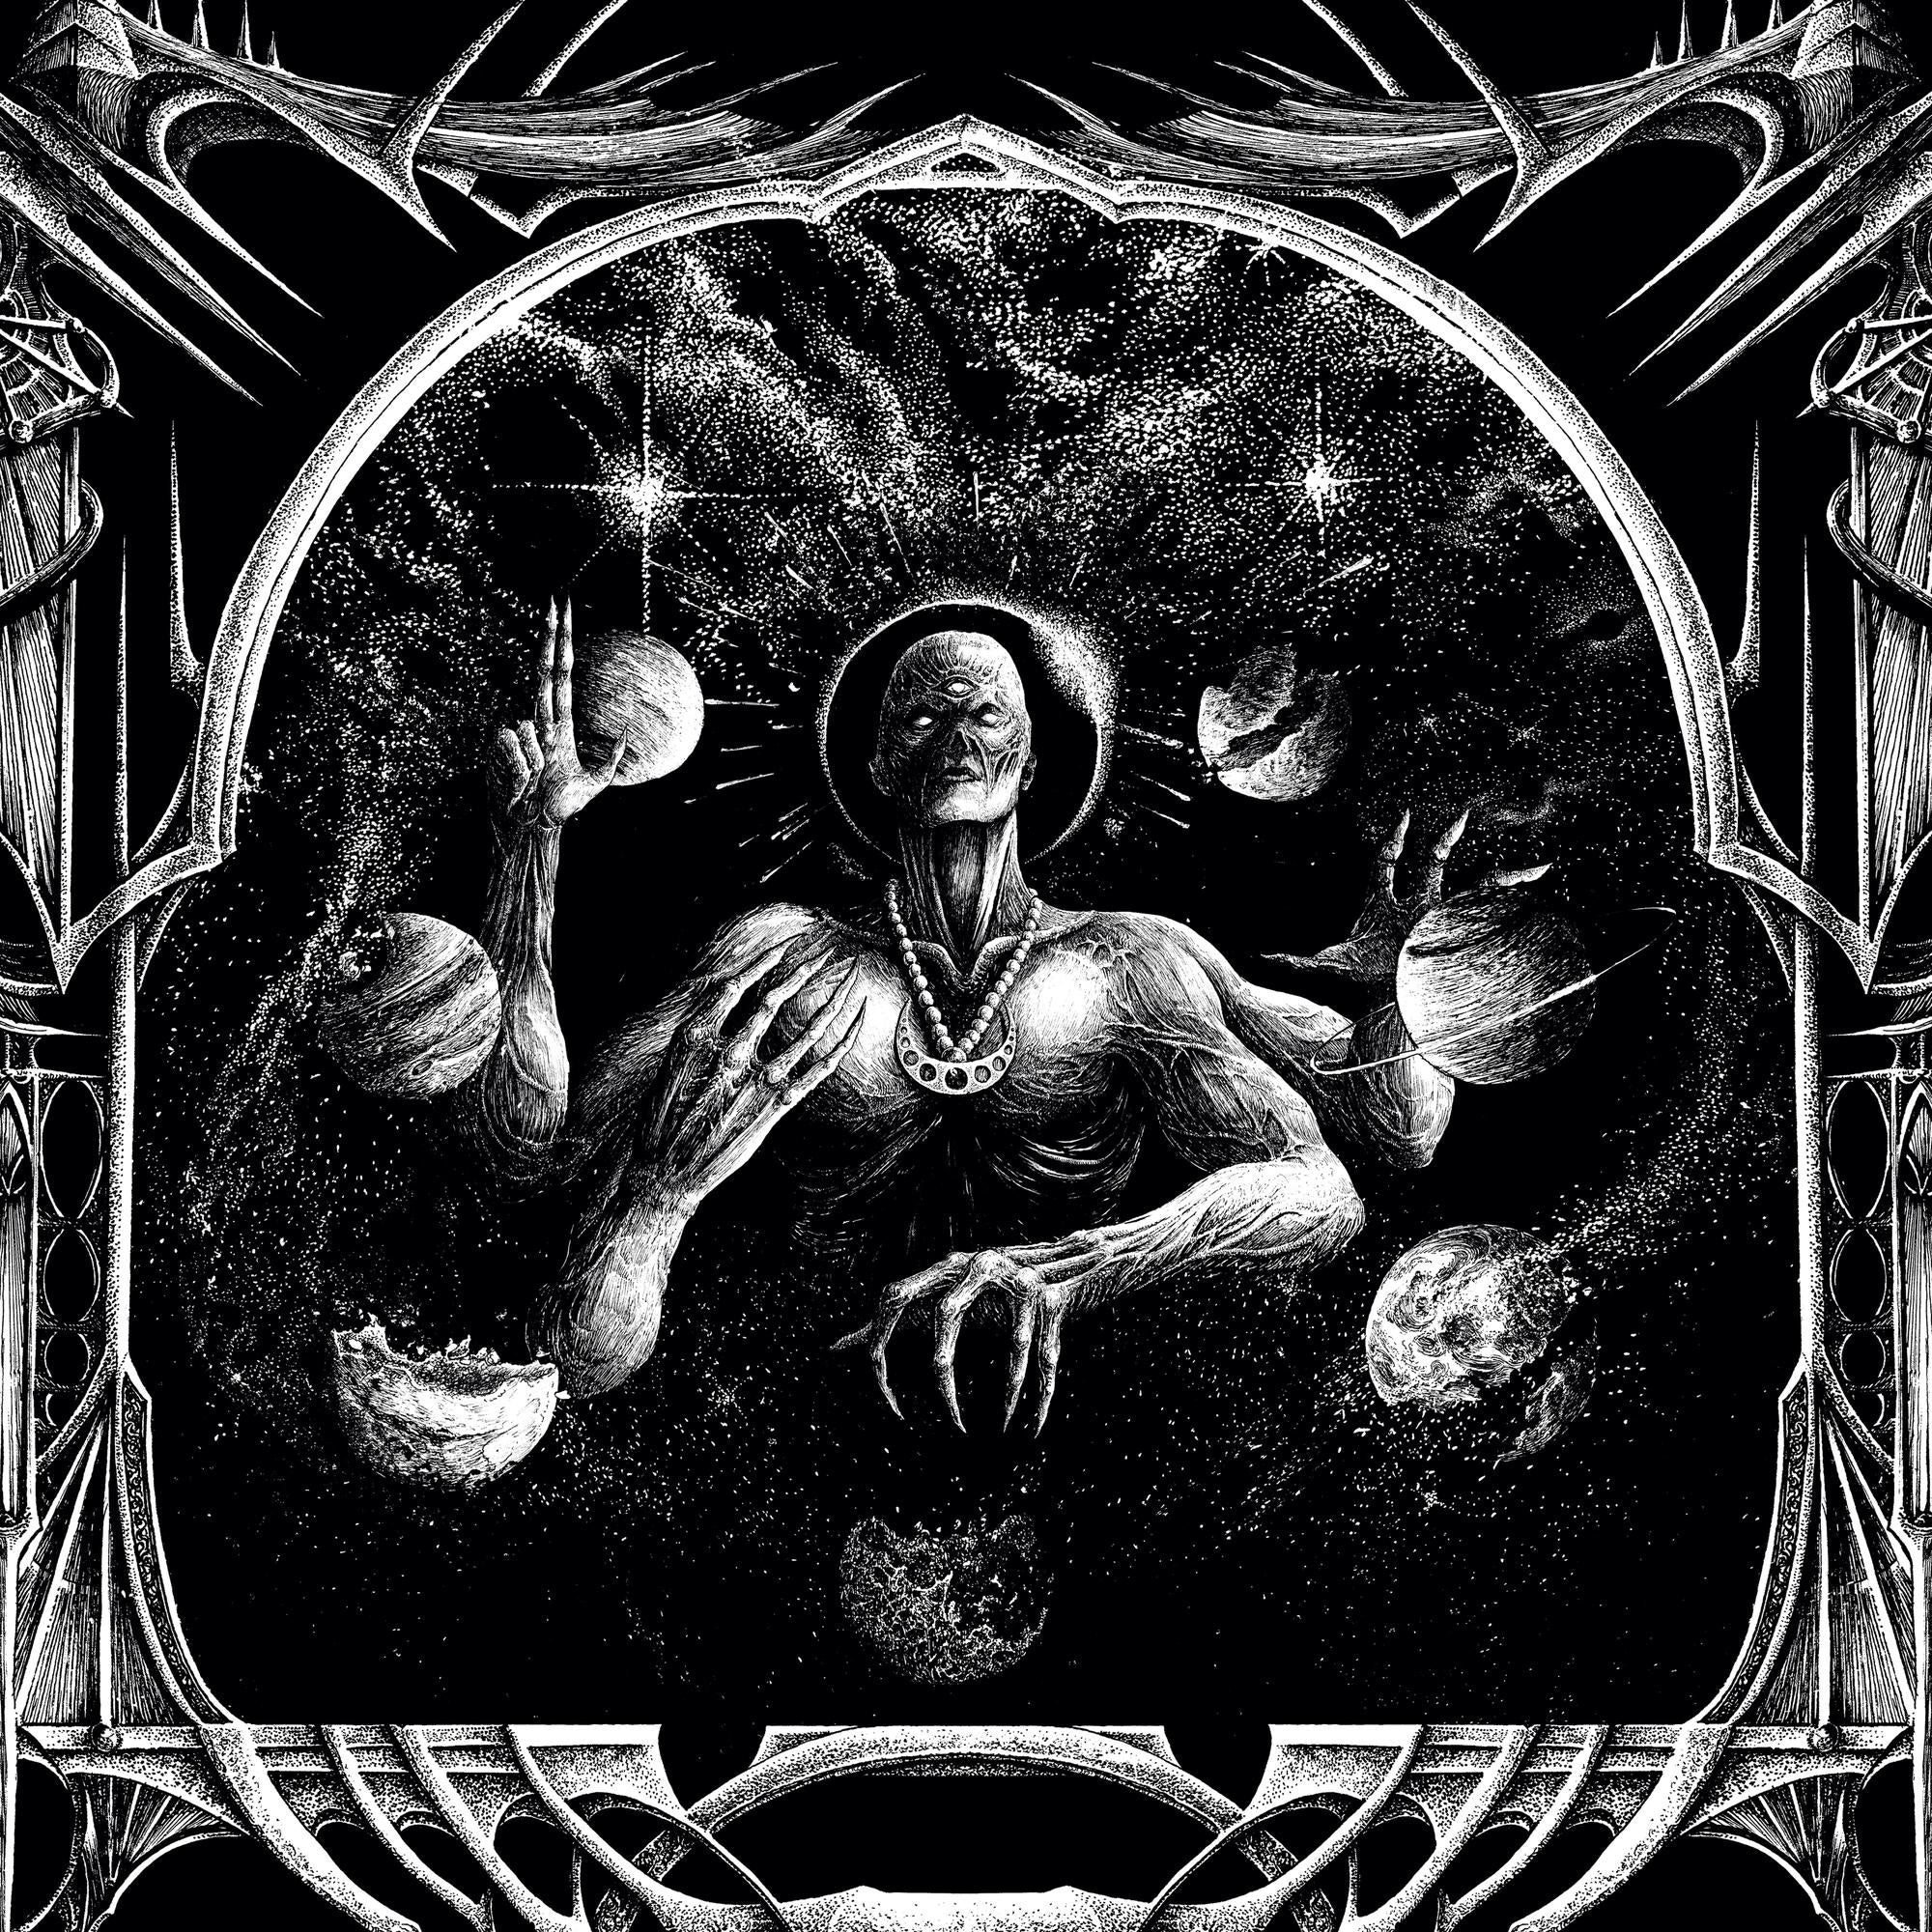 The Acacia Strain - It Comes In Waves - New LP Record 2020 Closed Casket Vinyl - Metalcore / Doom